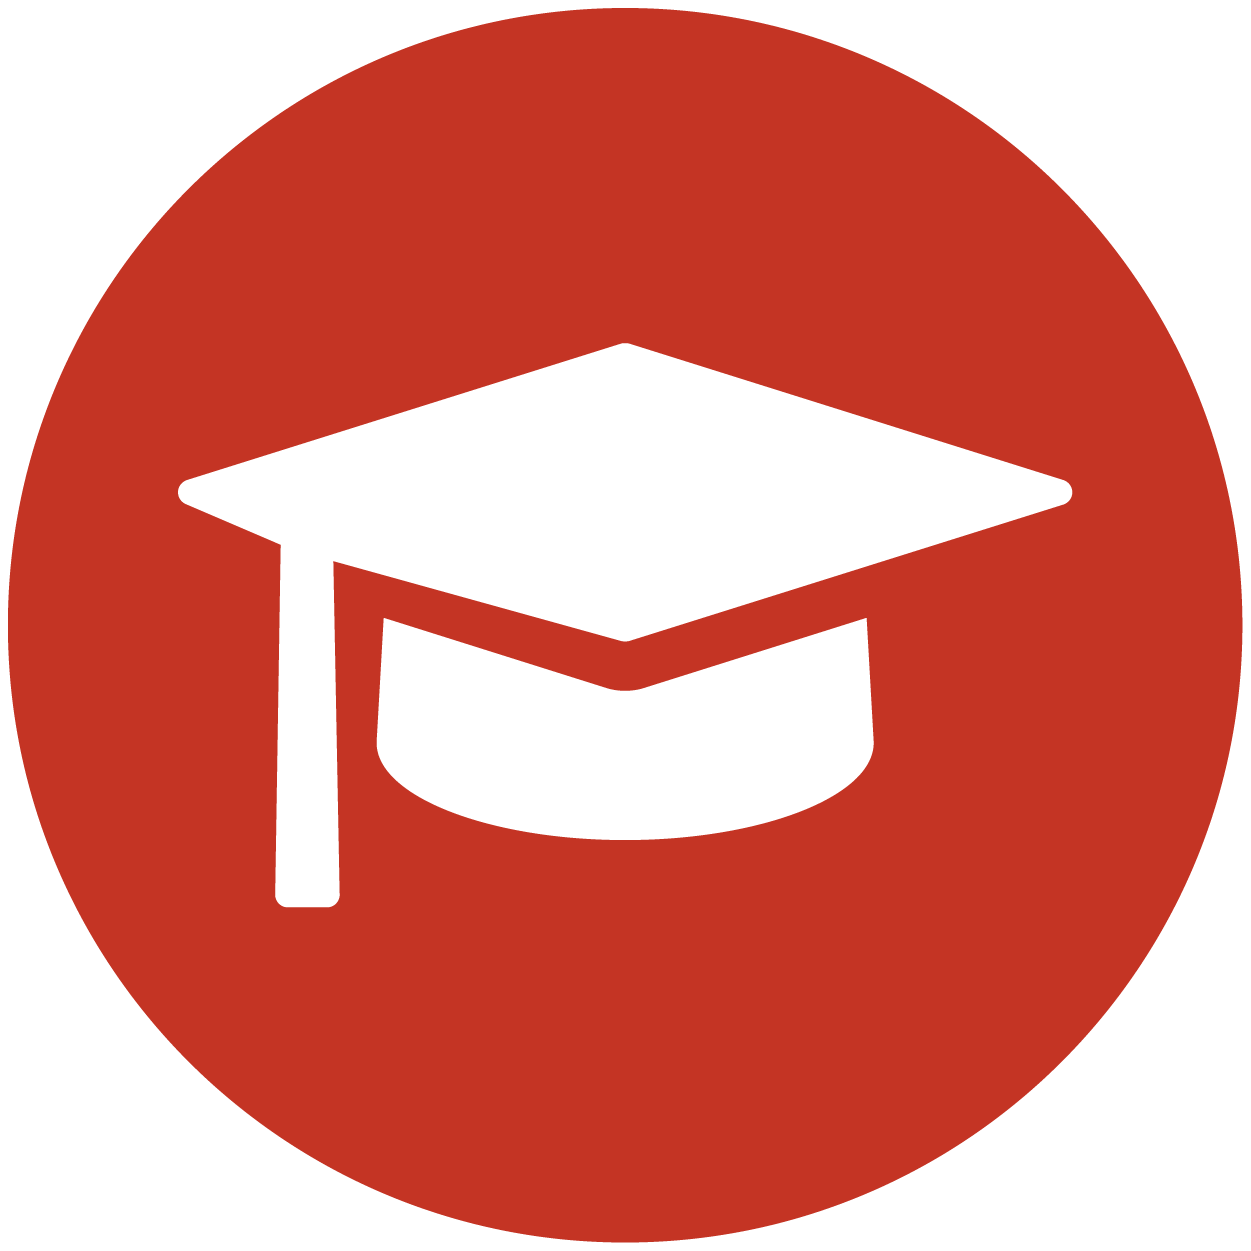 graduation cap icon for explore grad school